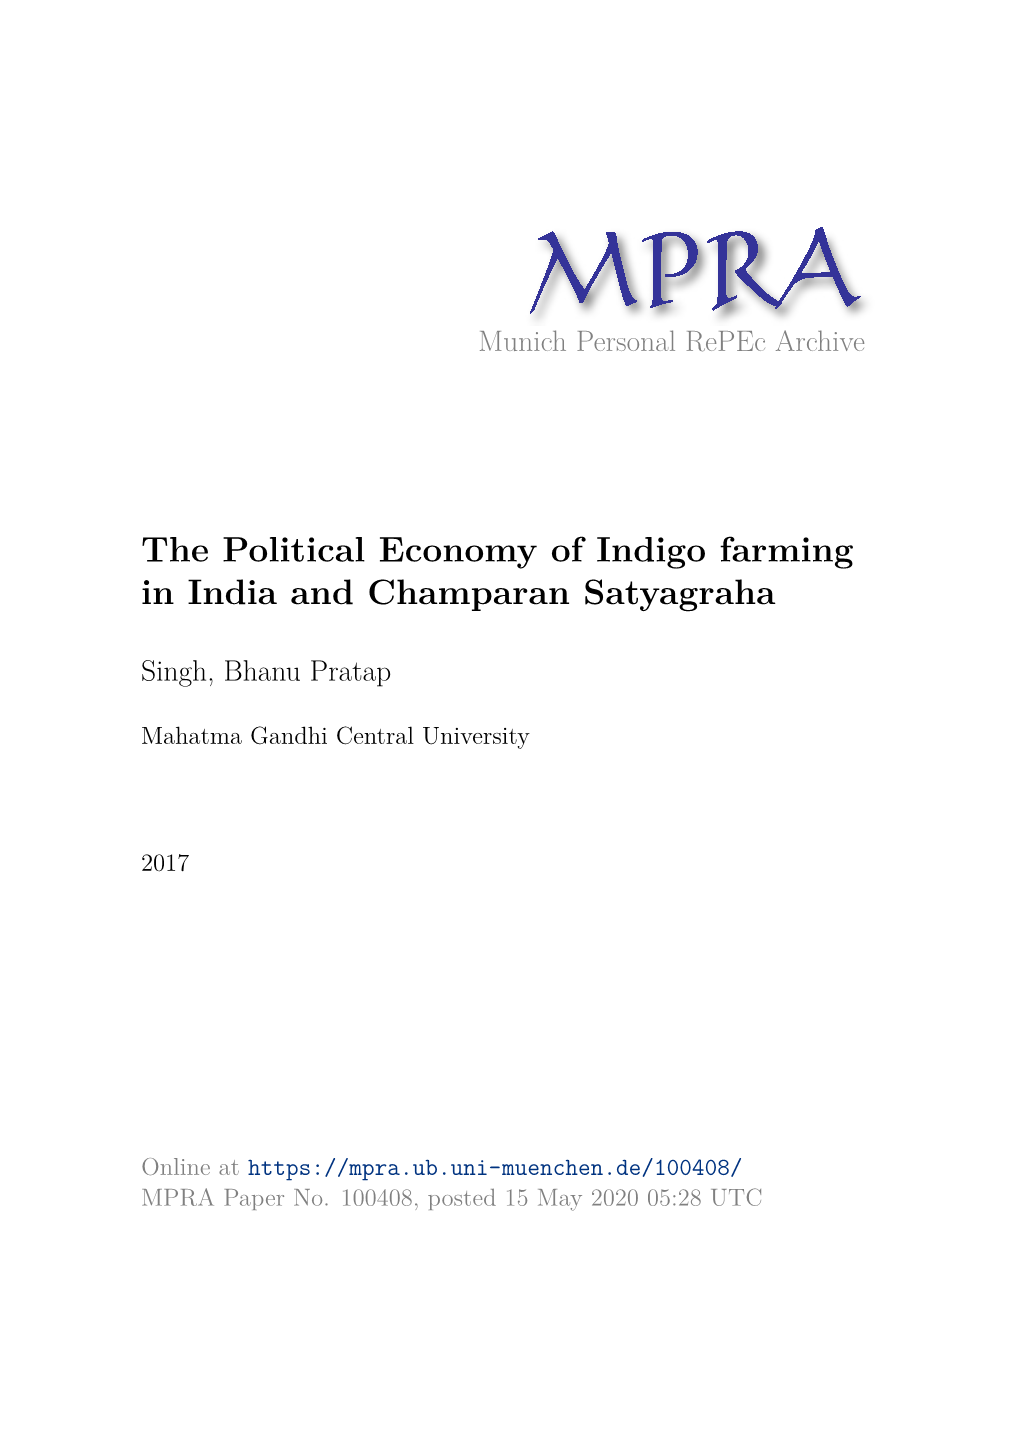 The Political Economy of Indigo Farming in India and Champaran Satyagraha